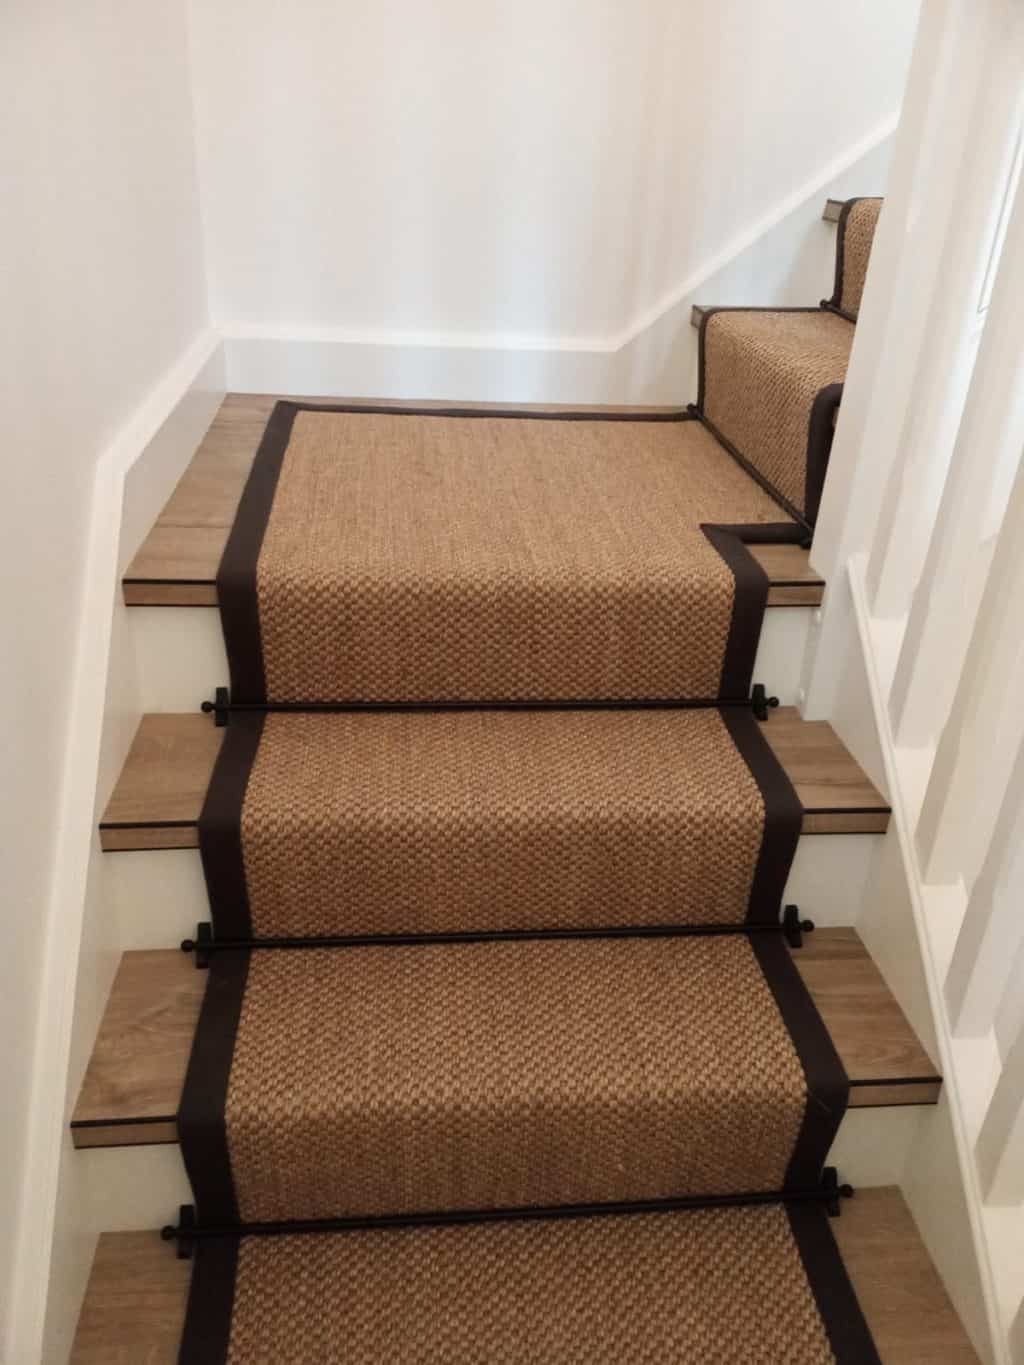 A sisal carpet stair runner by alternative flooring with black binding